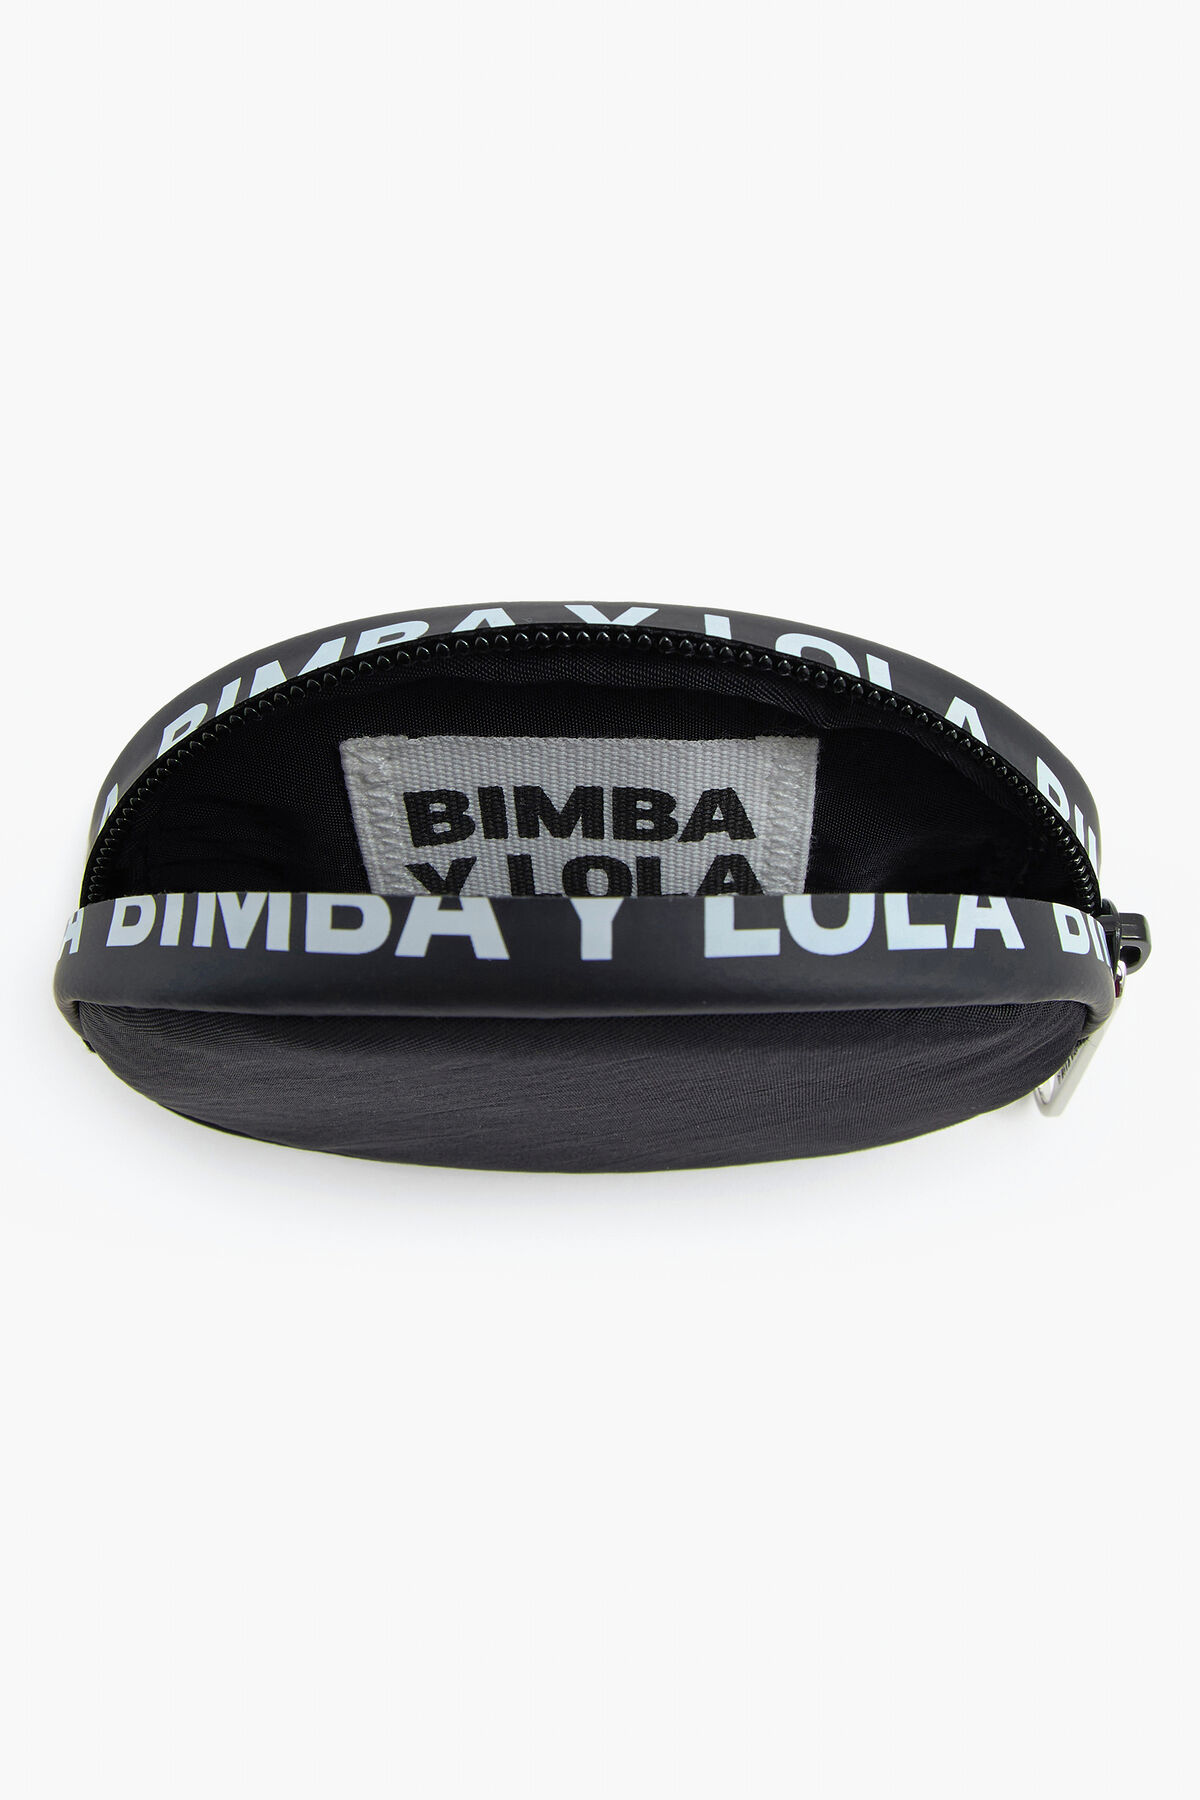 Monedero ovalado nylon negro por 19€ en Bimba y Lola